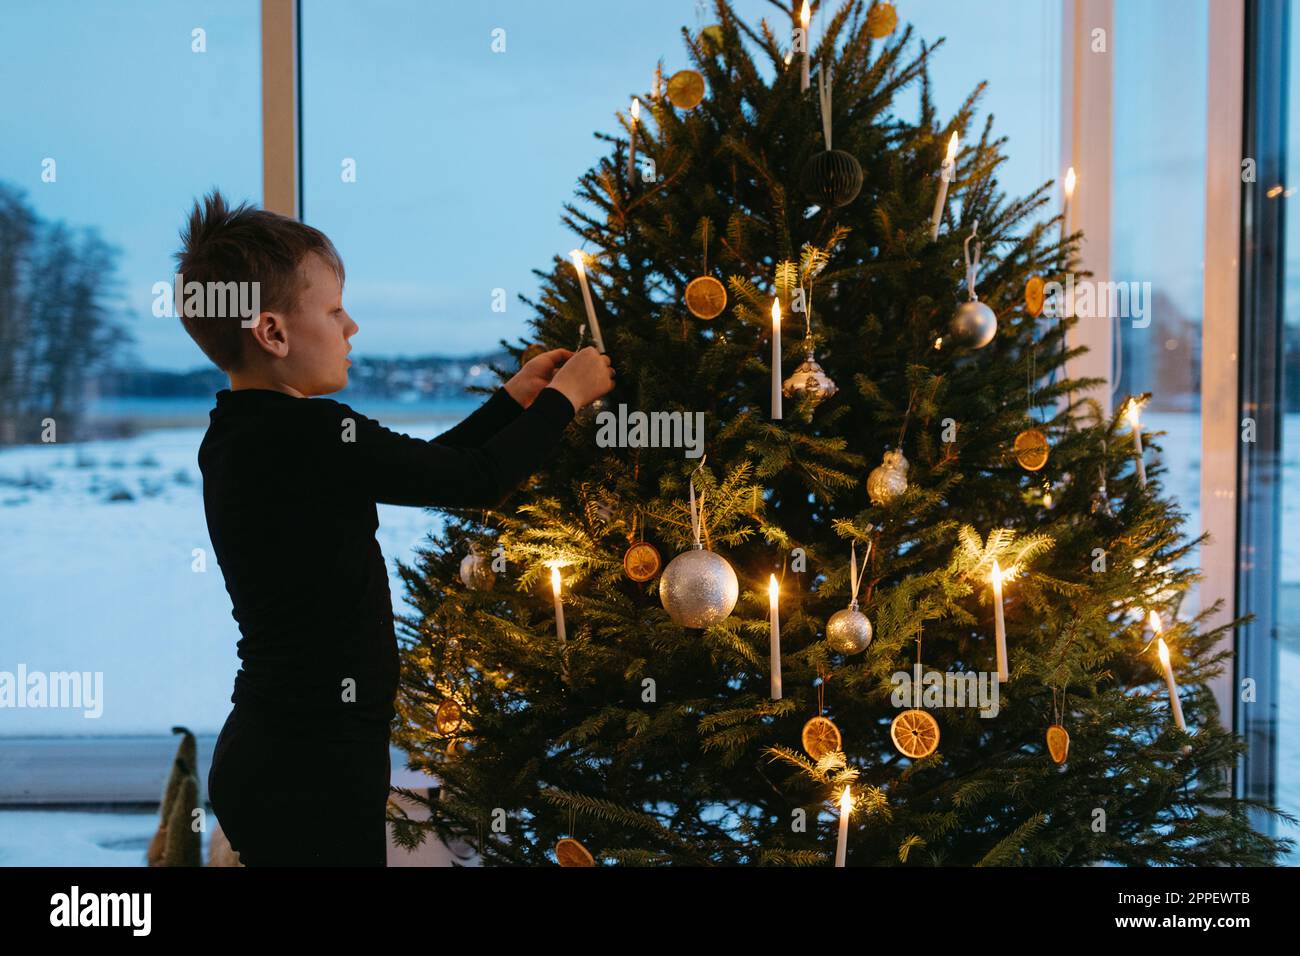 https://c8.alamy.com/comp/2PPEWTB/boy-decorating-christmas-tree-at-home-2PPEWTB.jpg